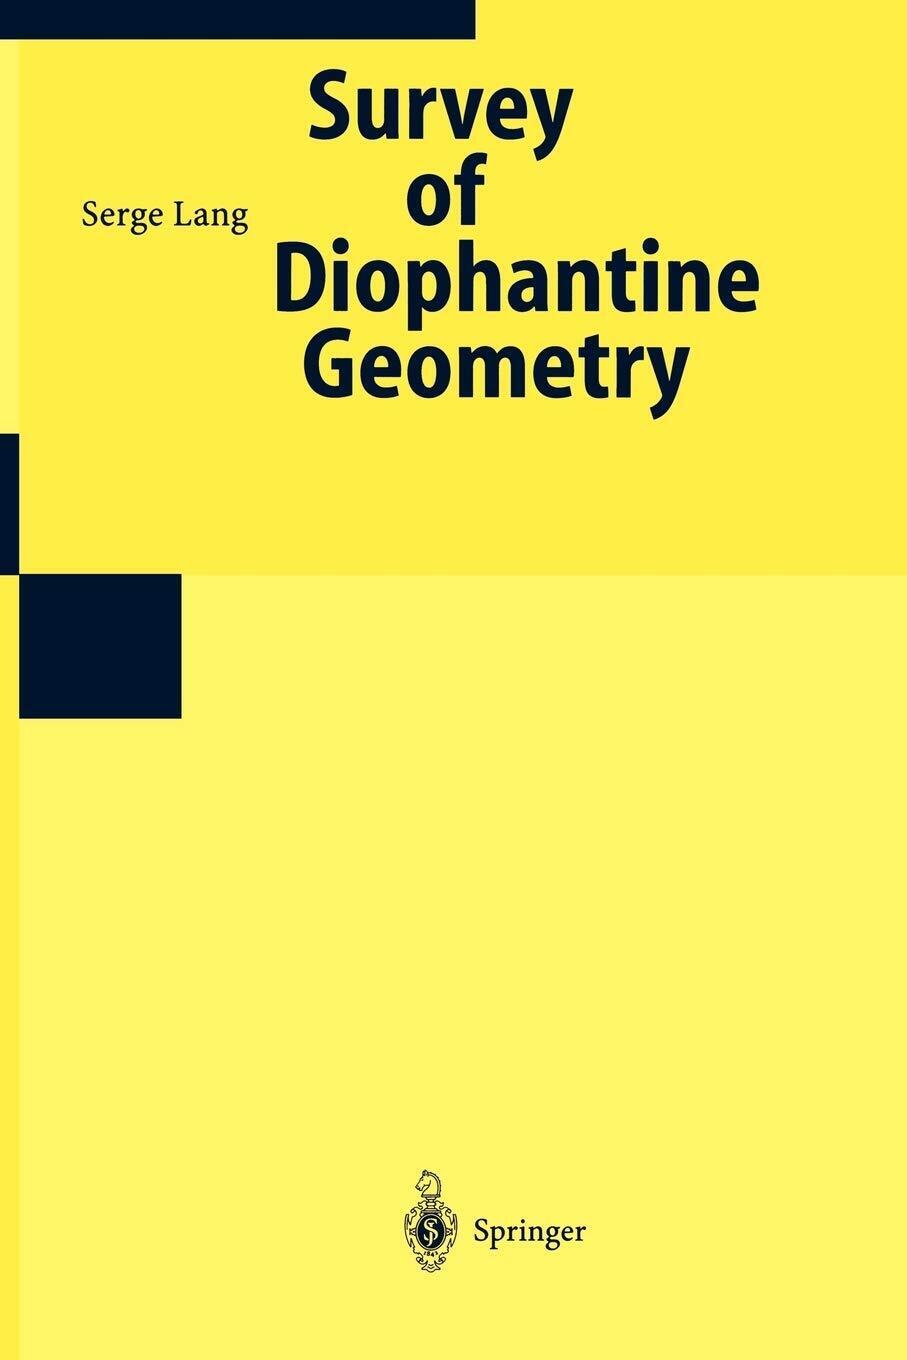 Survey On Diophantine Geometry - Serge Lang - Springer, 1997